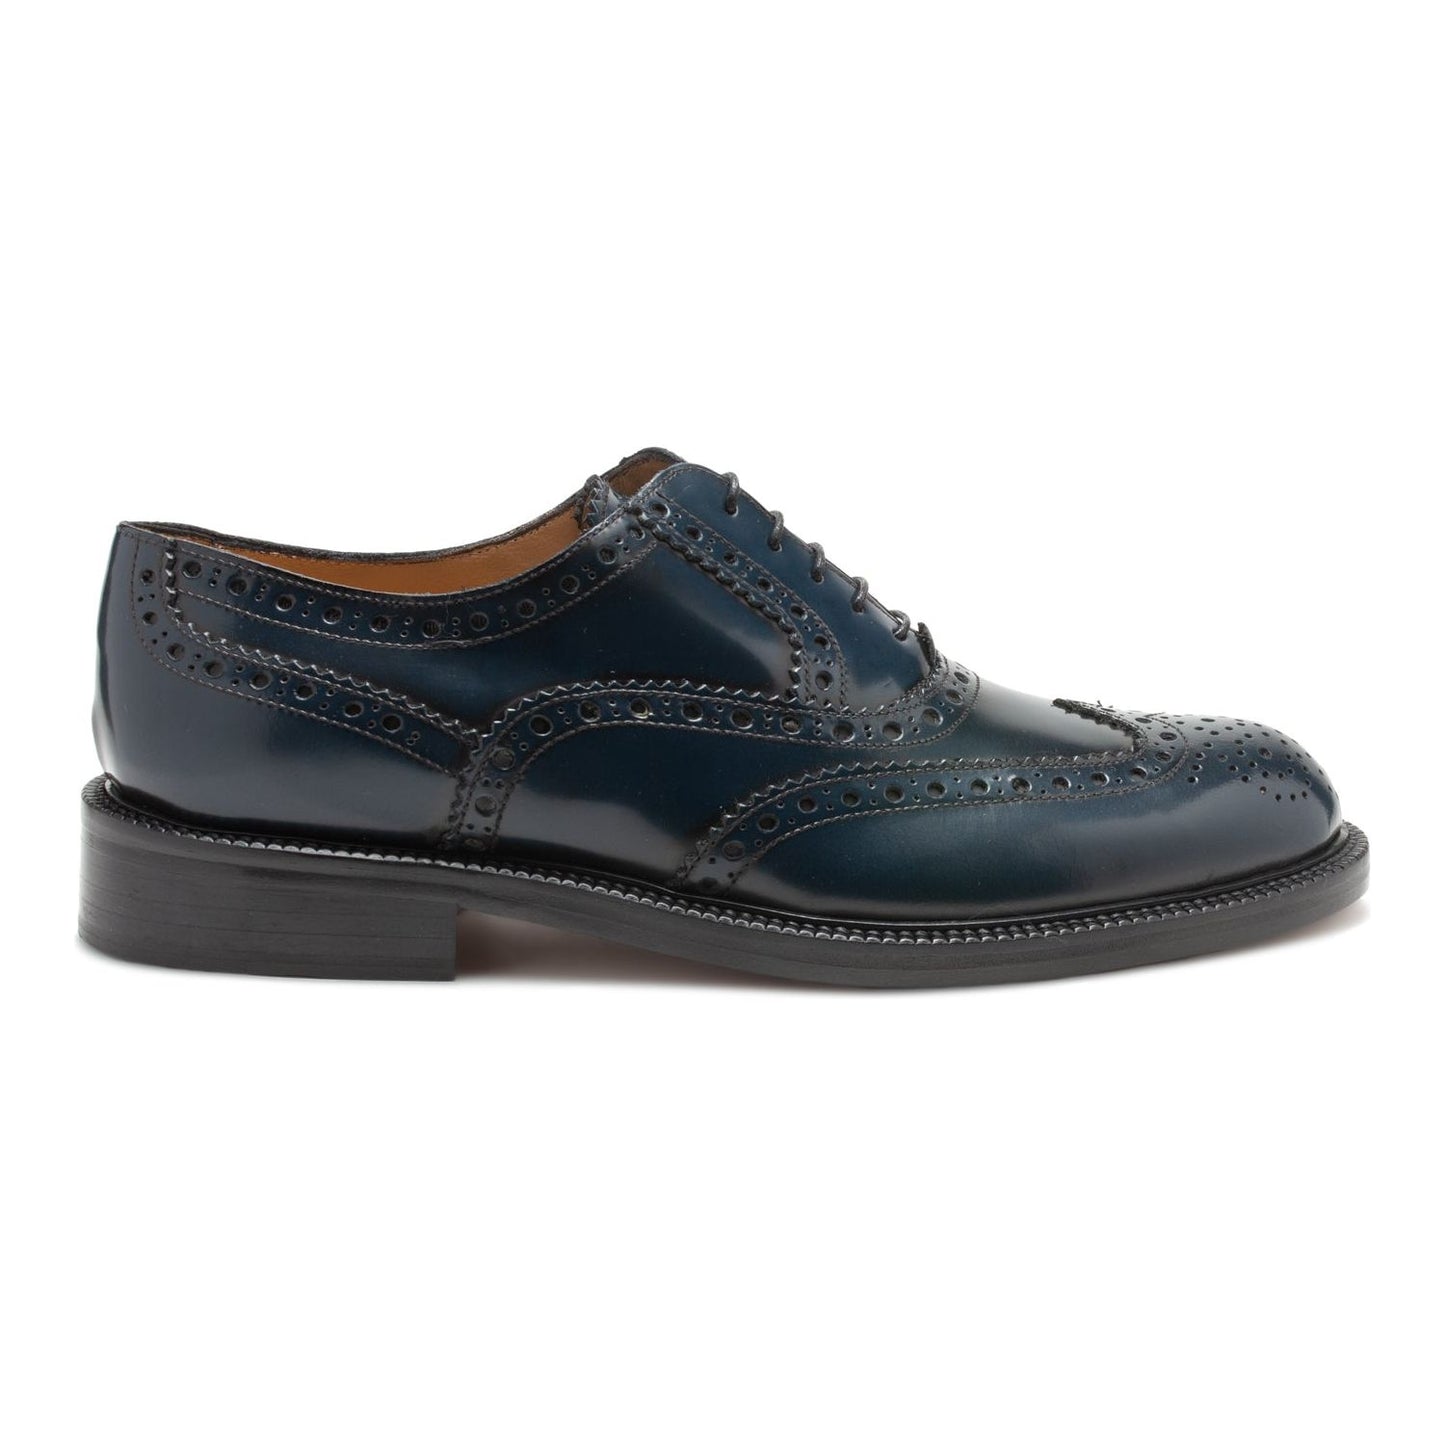 Saxone of Scotland Elegant Blue Leather Brogue Shoes blue-spazzolato-leather-mens-laced-full-brogue-shoes SM_Lato_AbrasivatoBlu-5c7c0411-38a_62a0ed47-c5e4-41c4-861b-d5e0eafbabfa.jpg